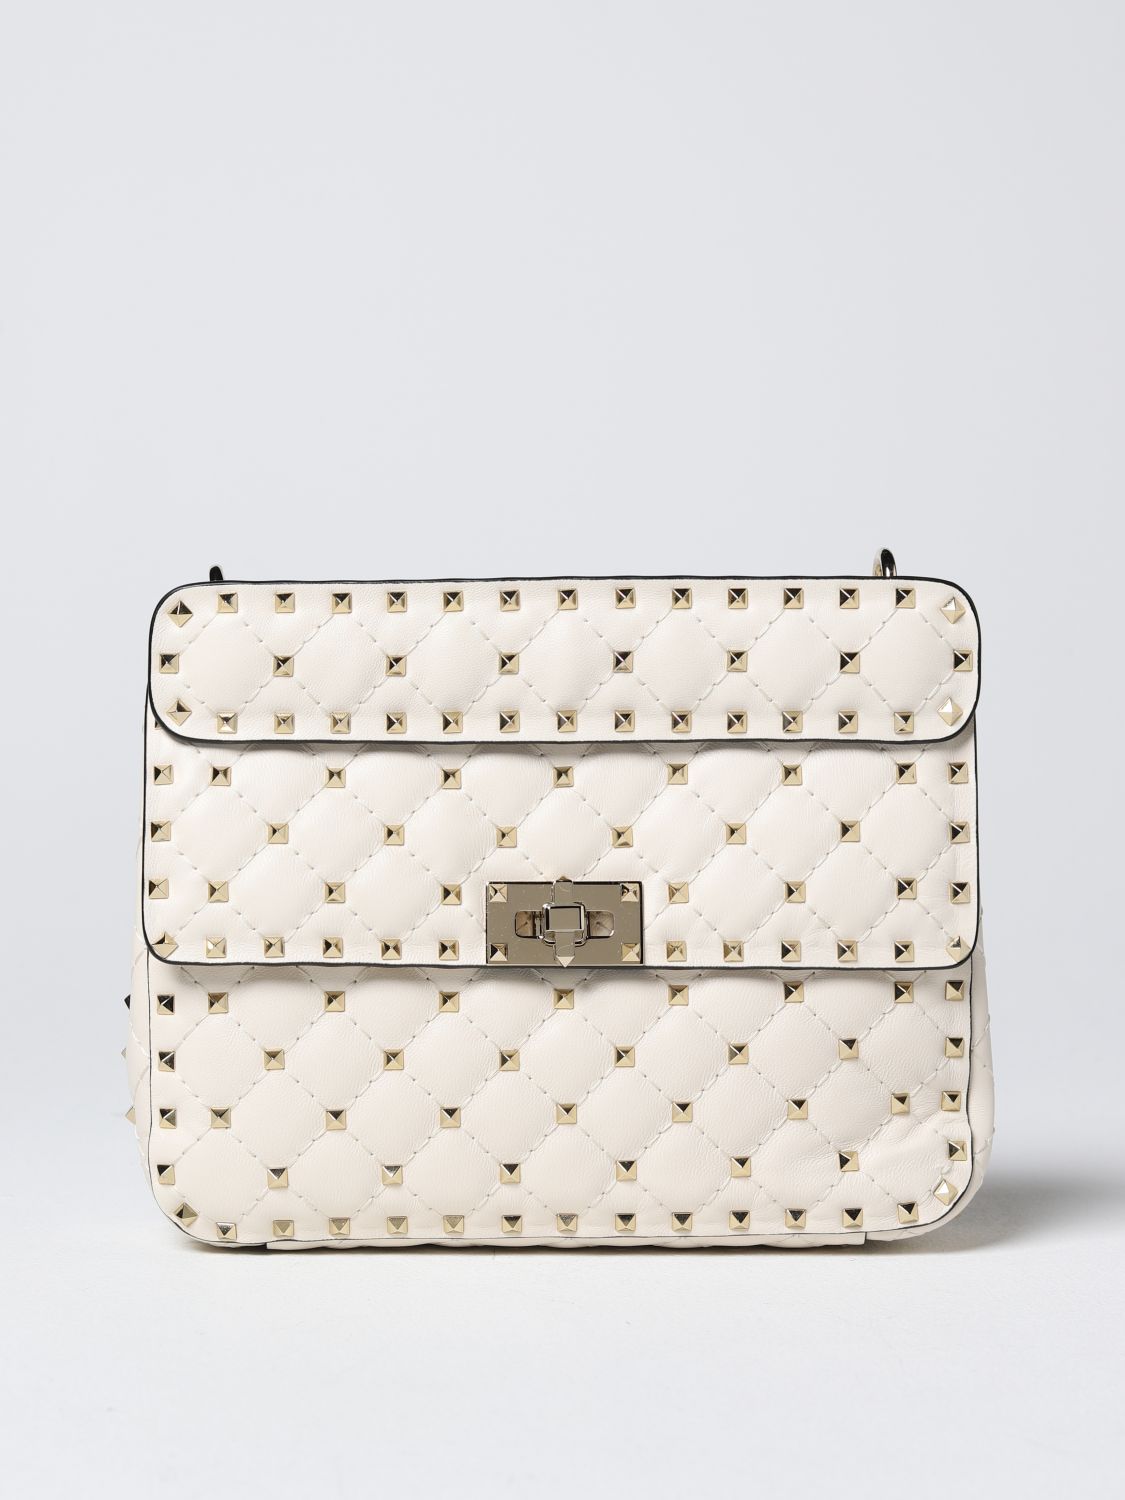 VALENTINO Rockstud bag in quilted nappa Ivory | Valentino Garavani handbag 2W2B0122NAP online at